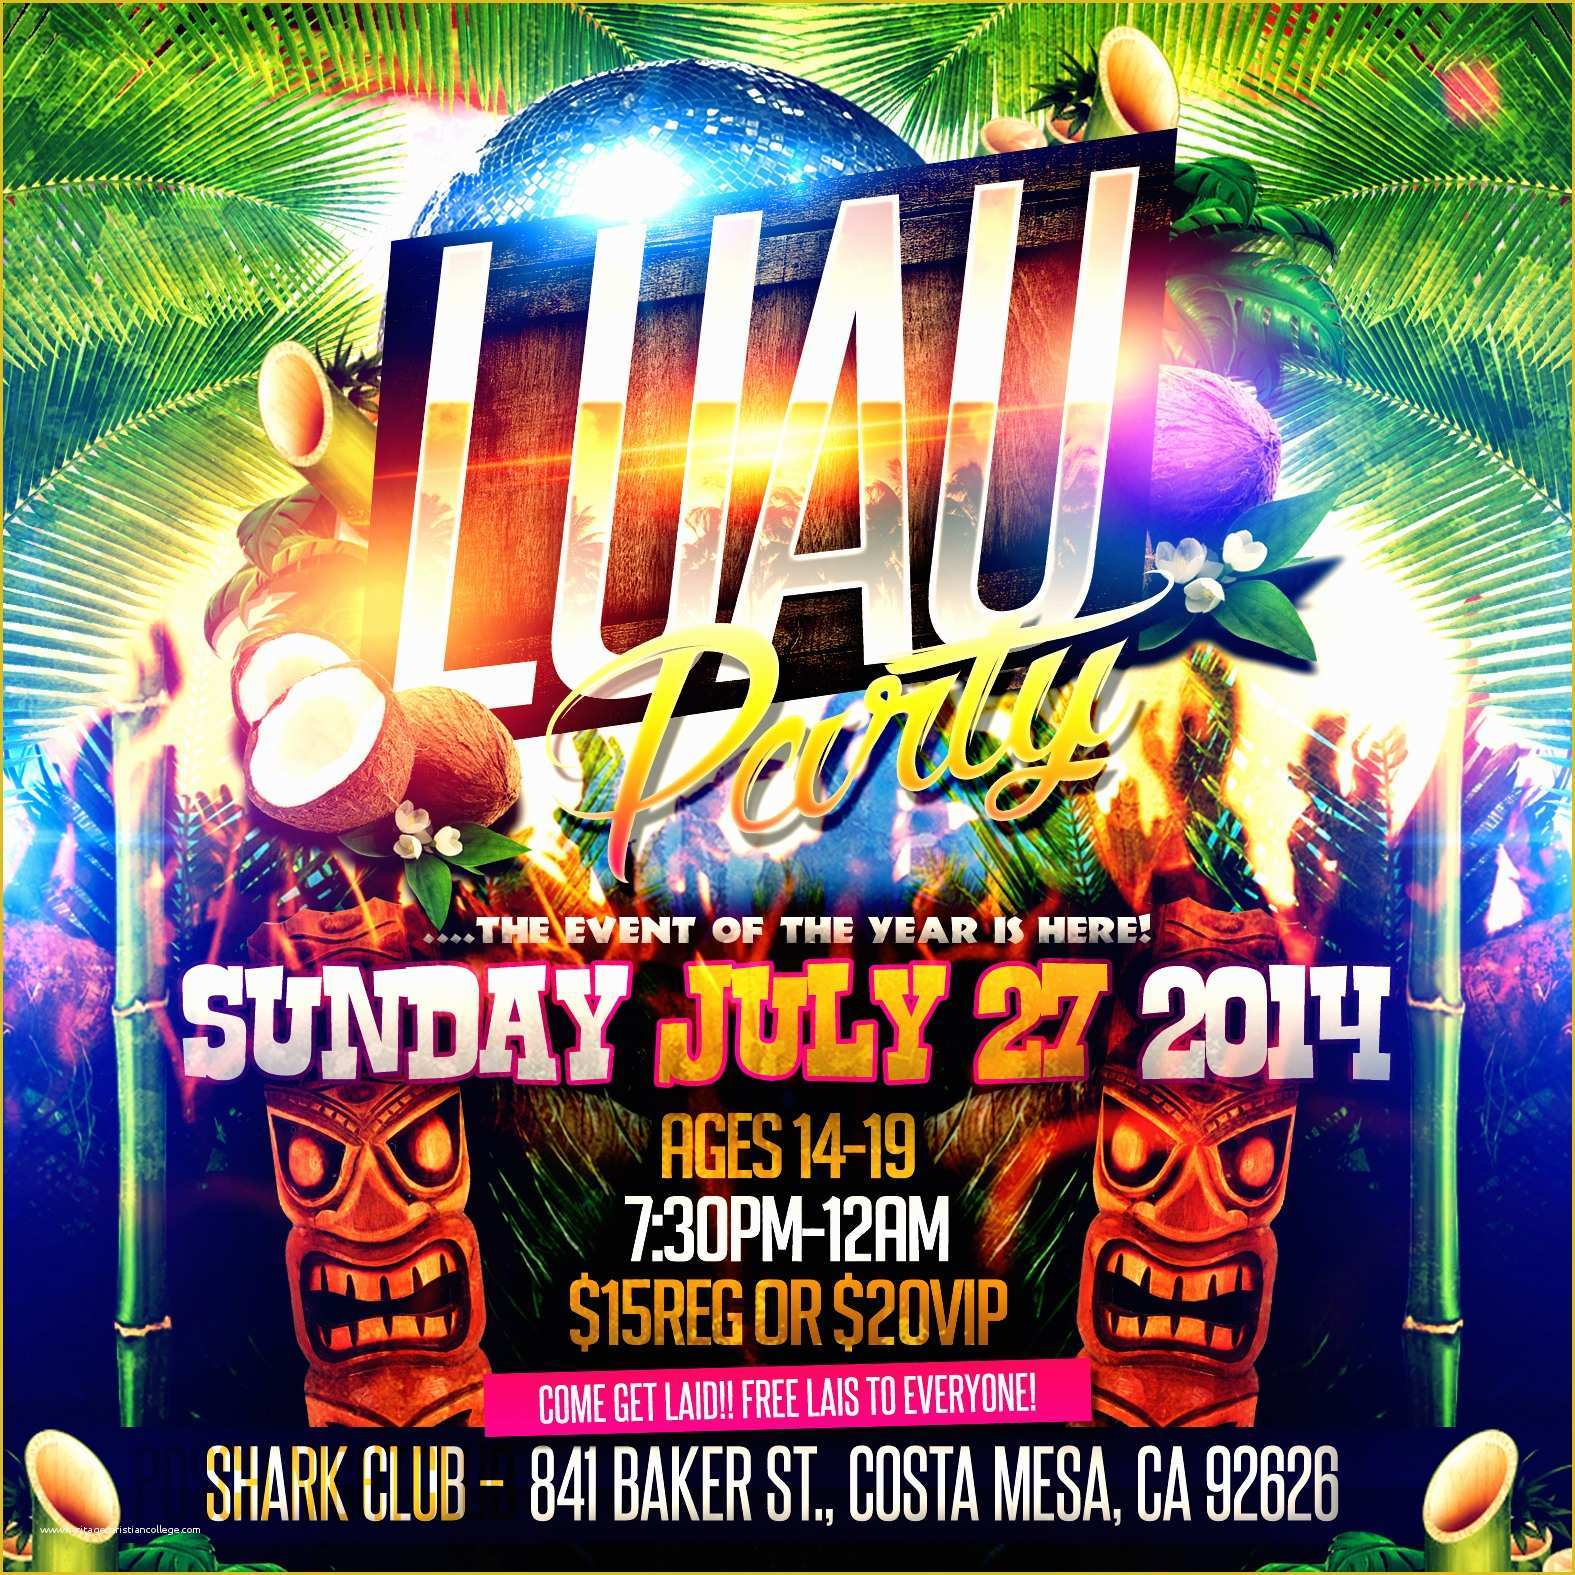 Free Hawaiian Luau Flyer Template Of Club Starz orange County Sunday Jul 27 2014 Luau